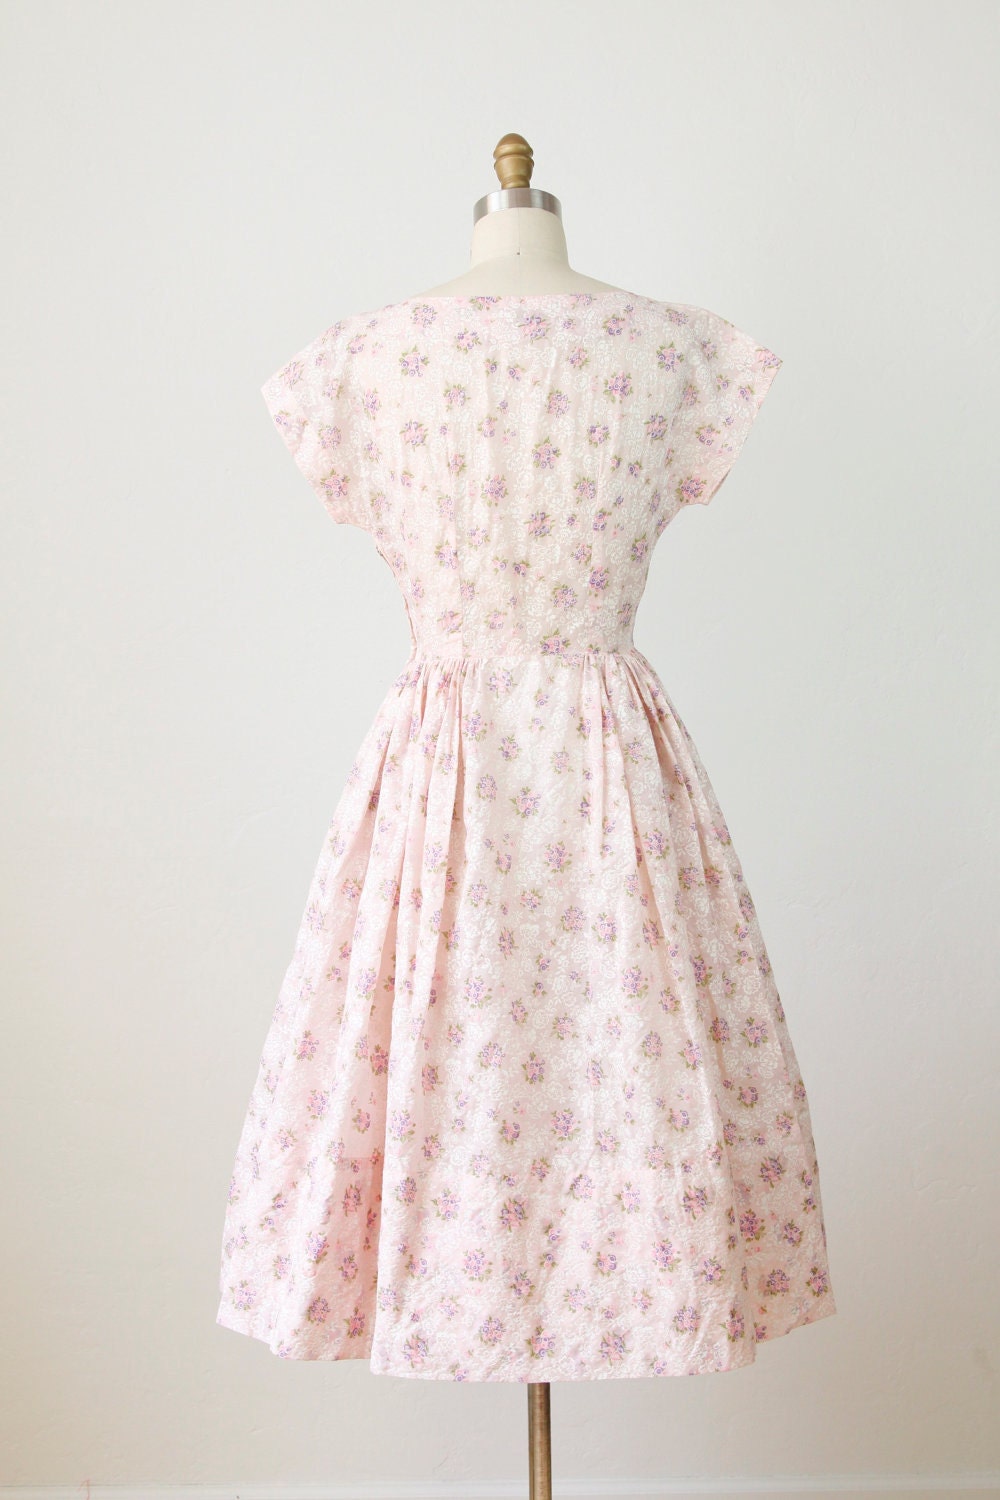 Full Skirt 1940s Dress Pink Floral Print